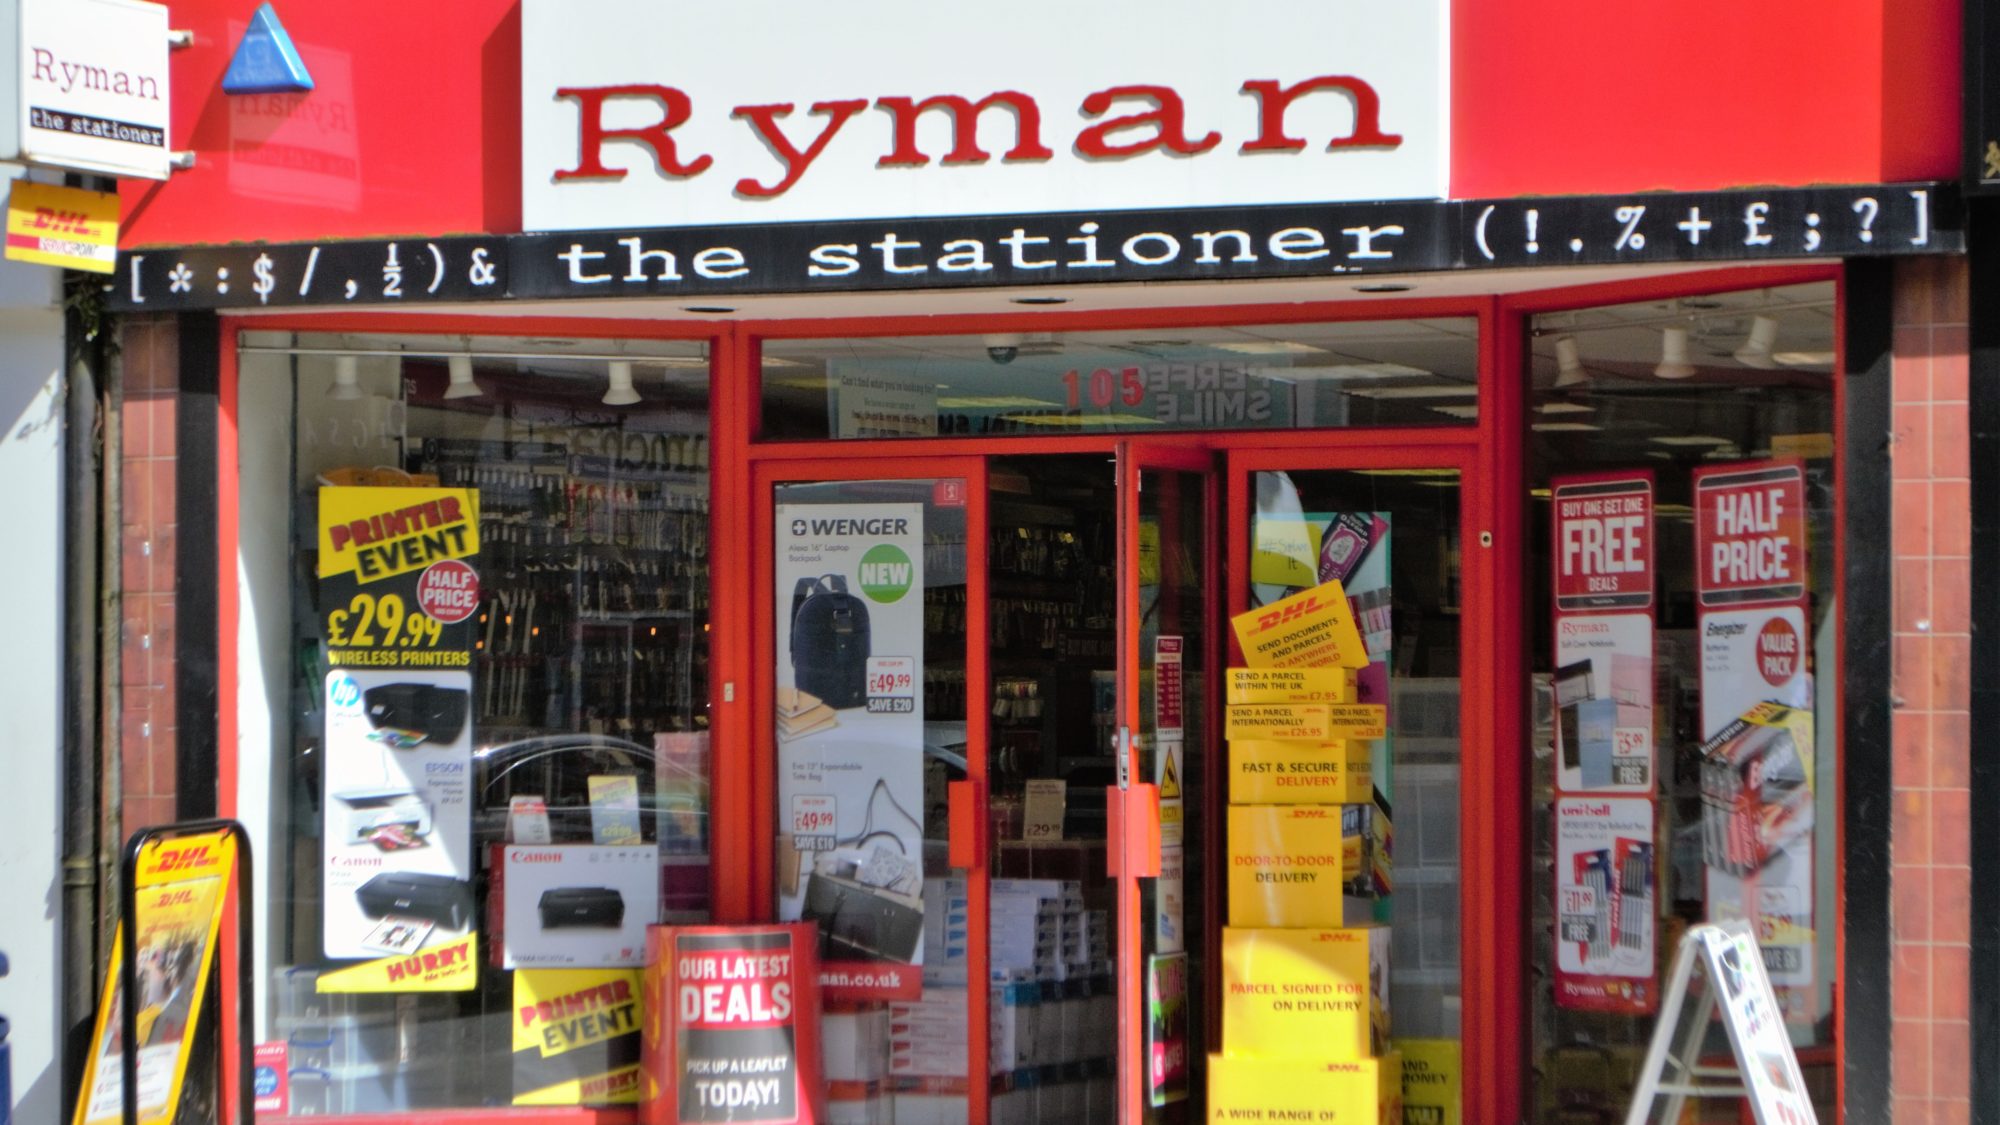 Manchester children’s society receives stationery donation from Ryman